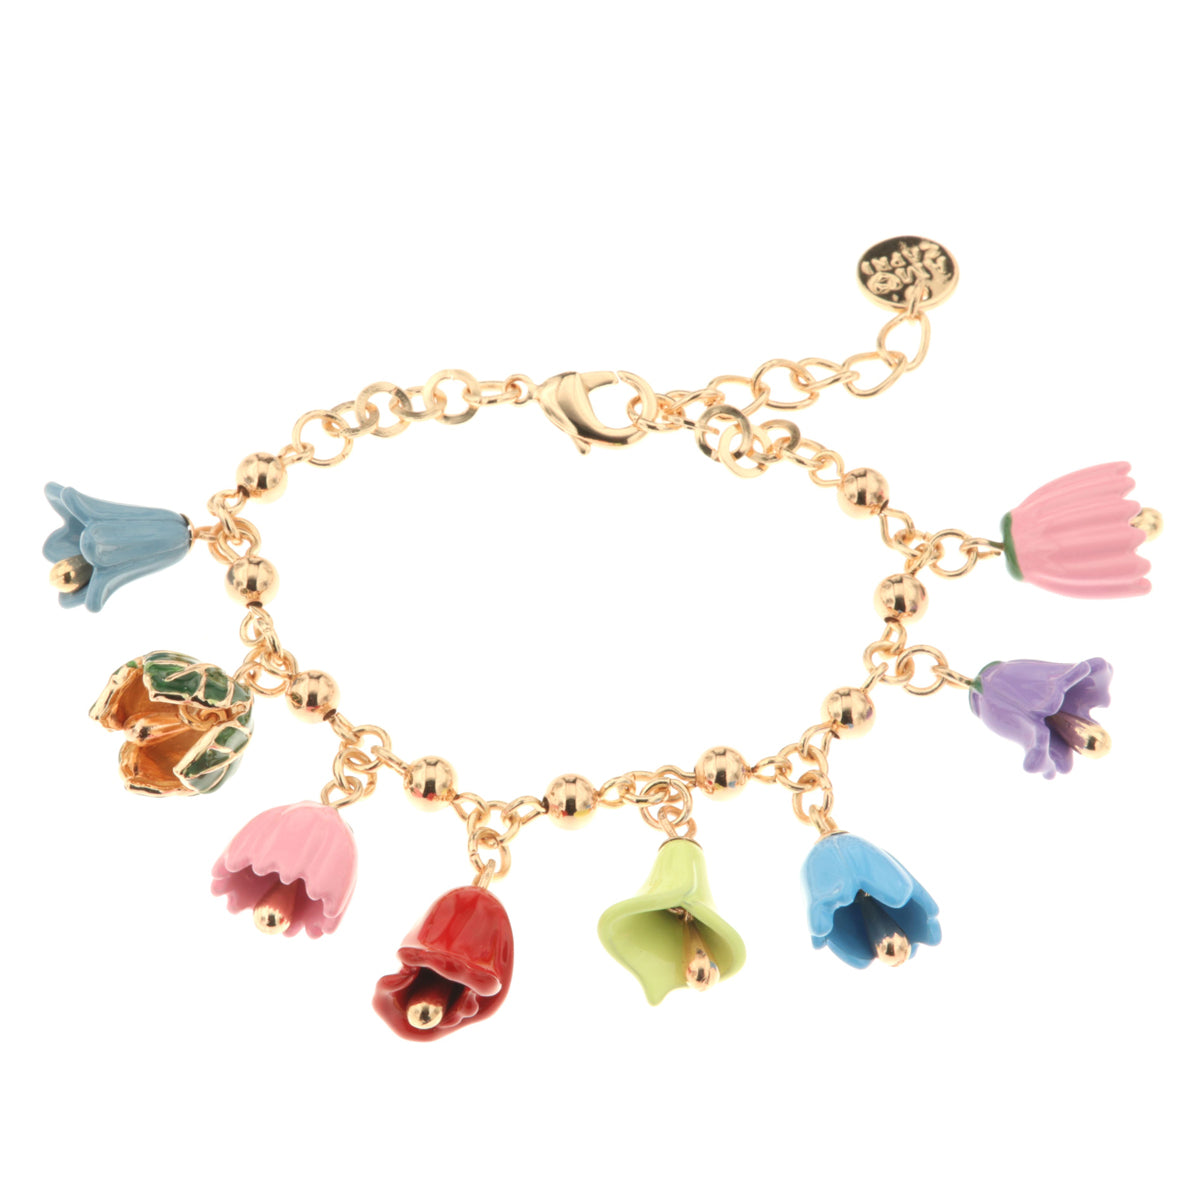 Metal bracelet with floral bells embellished with colored glazes